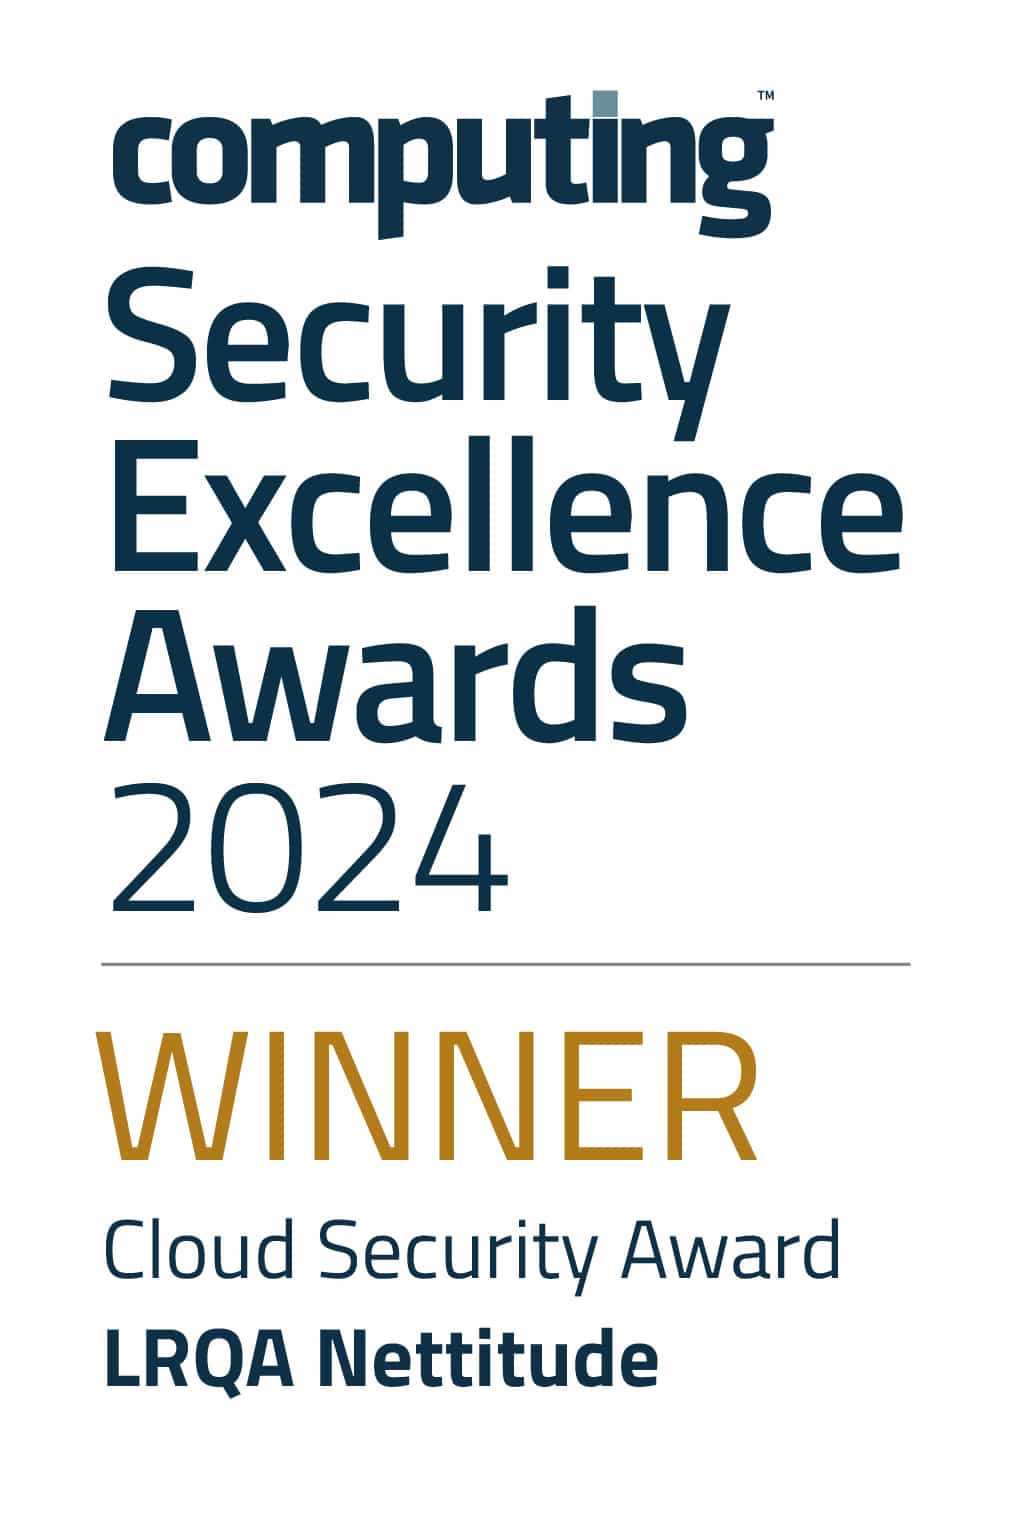 Computing Security Excellence Awards 2024 - WINNER - Cloud Security Award